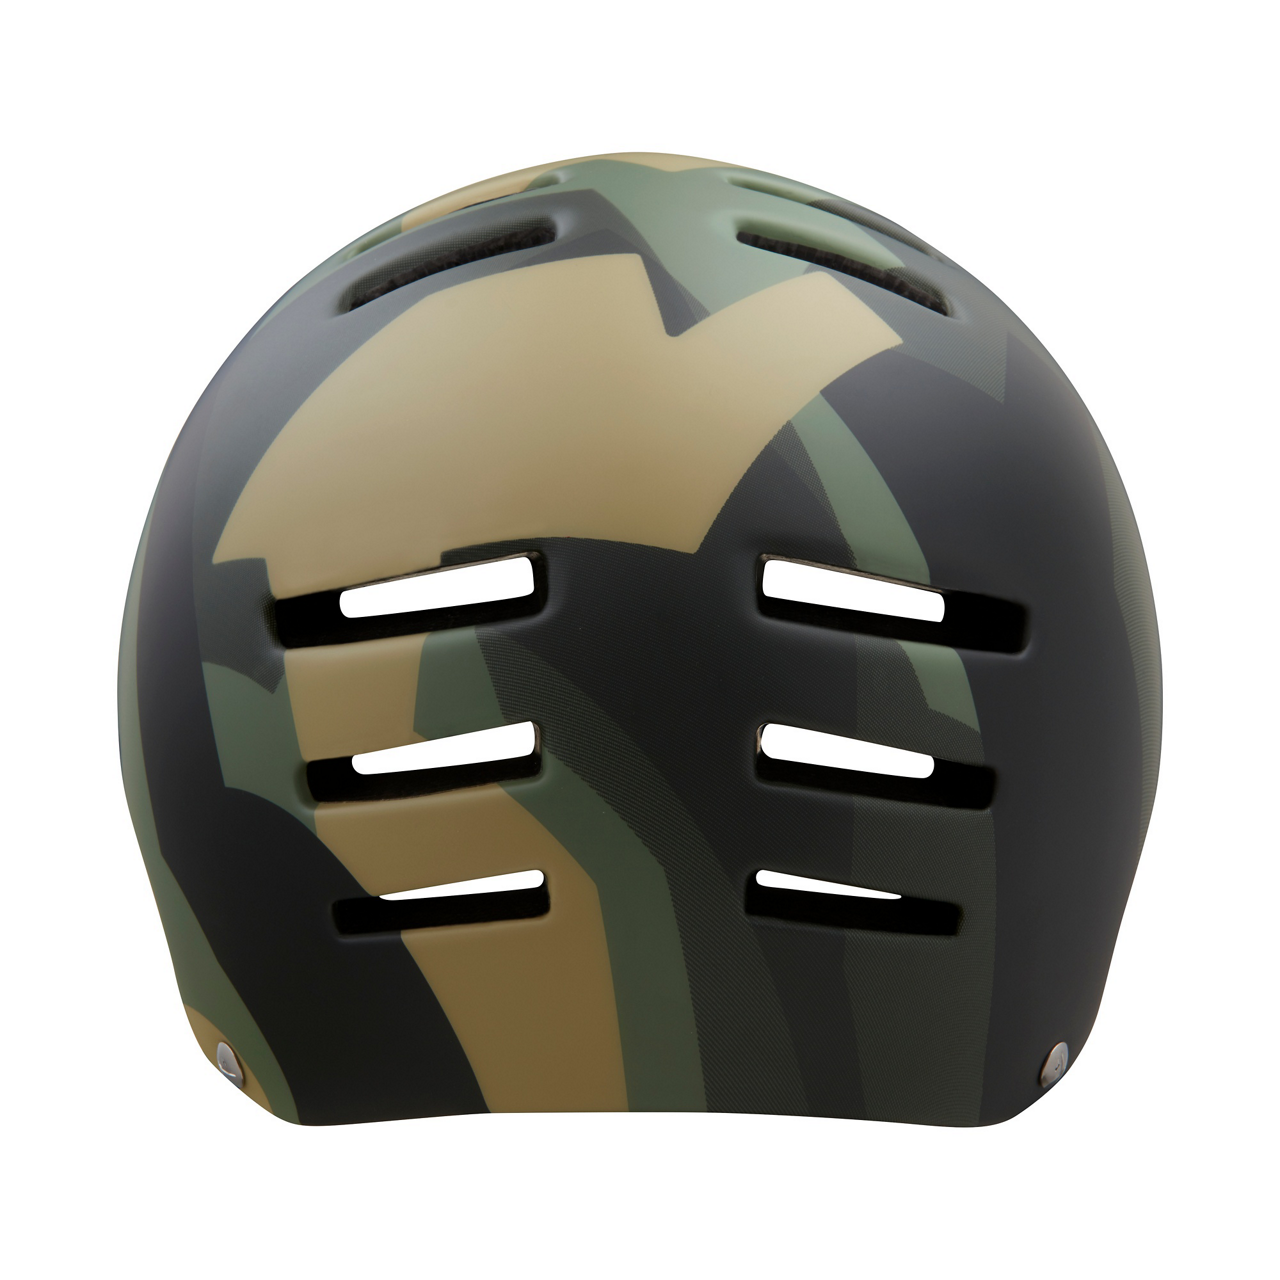 Armor 2.0 commuter helm